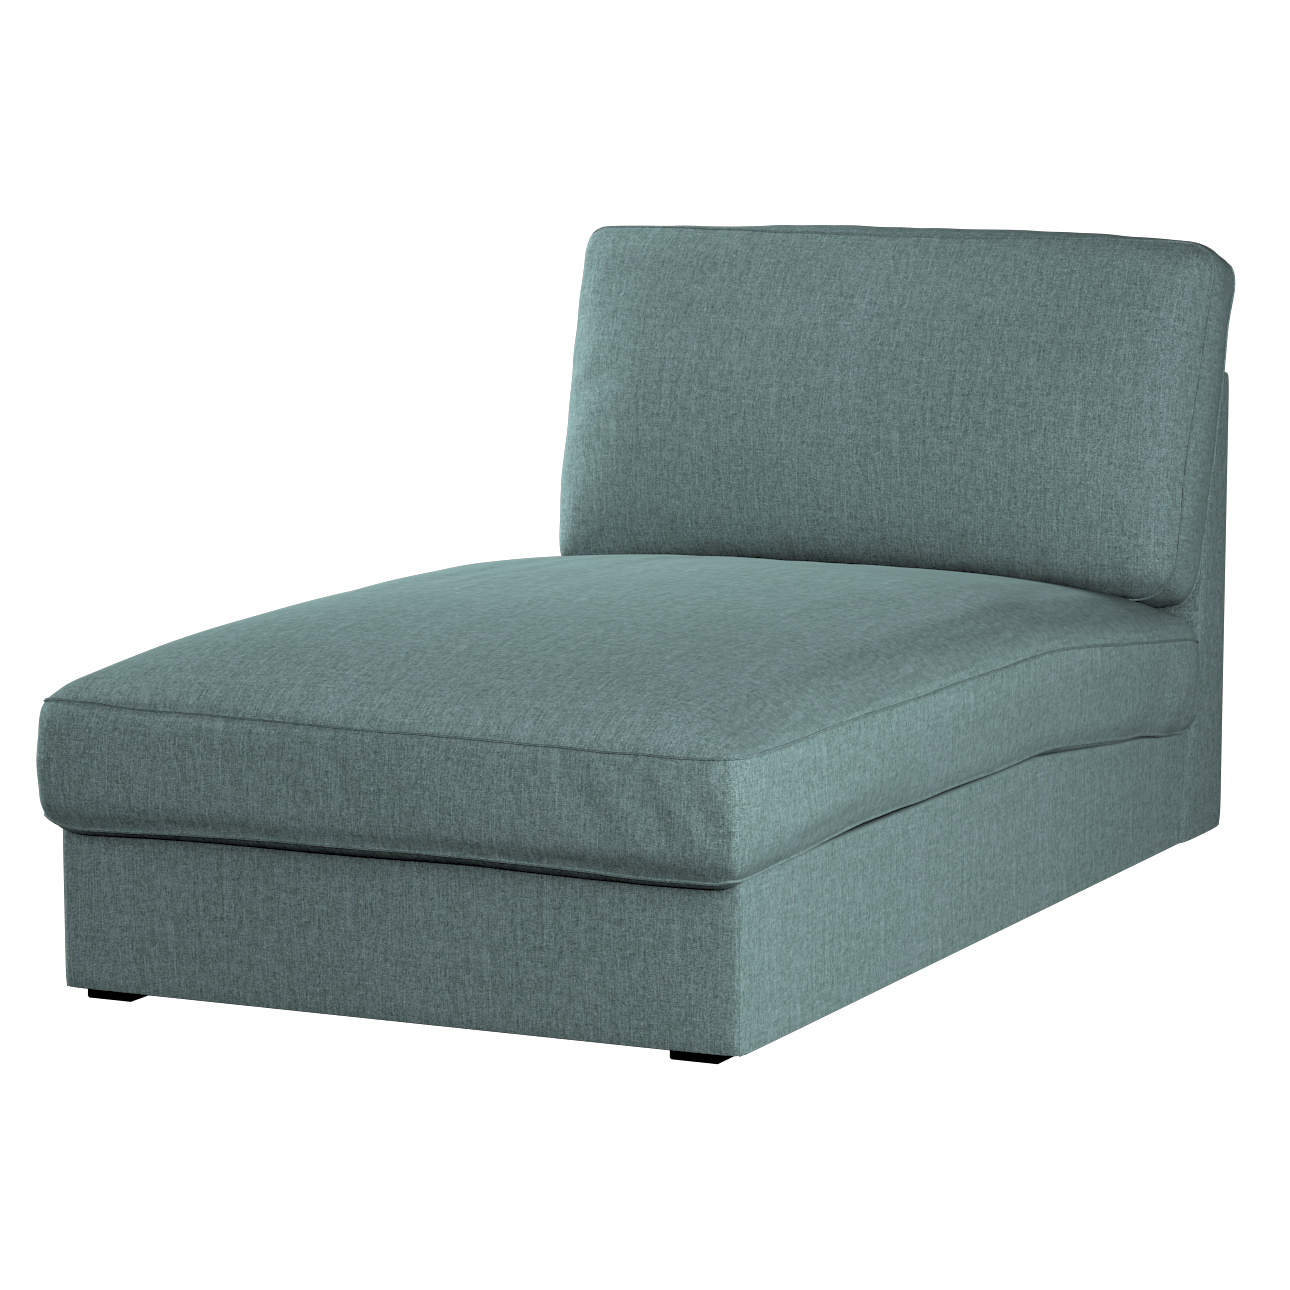 Bezug für Kivik Recamiere Sofa, grau- blau, Bezug für Kivik Recamiere, City günstig online kaufen